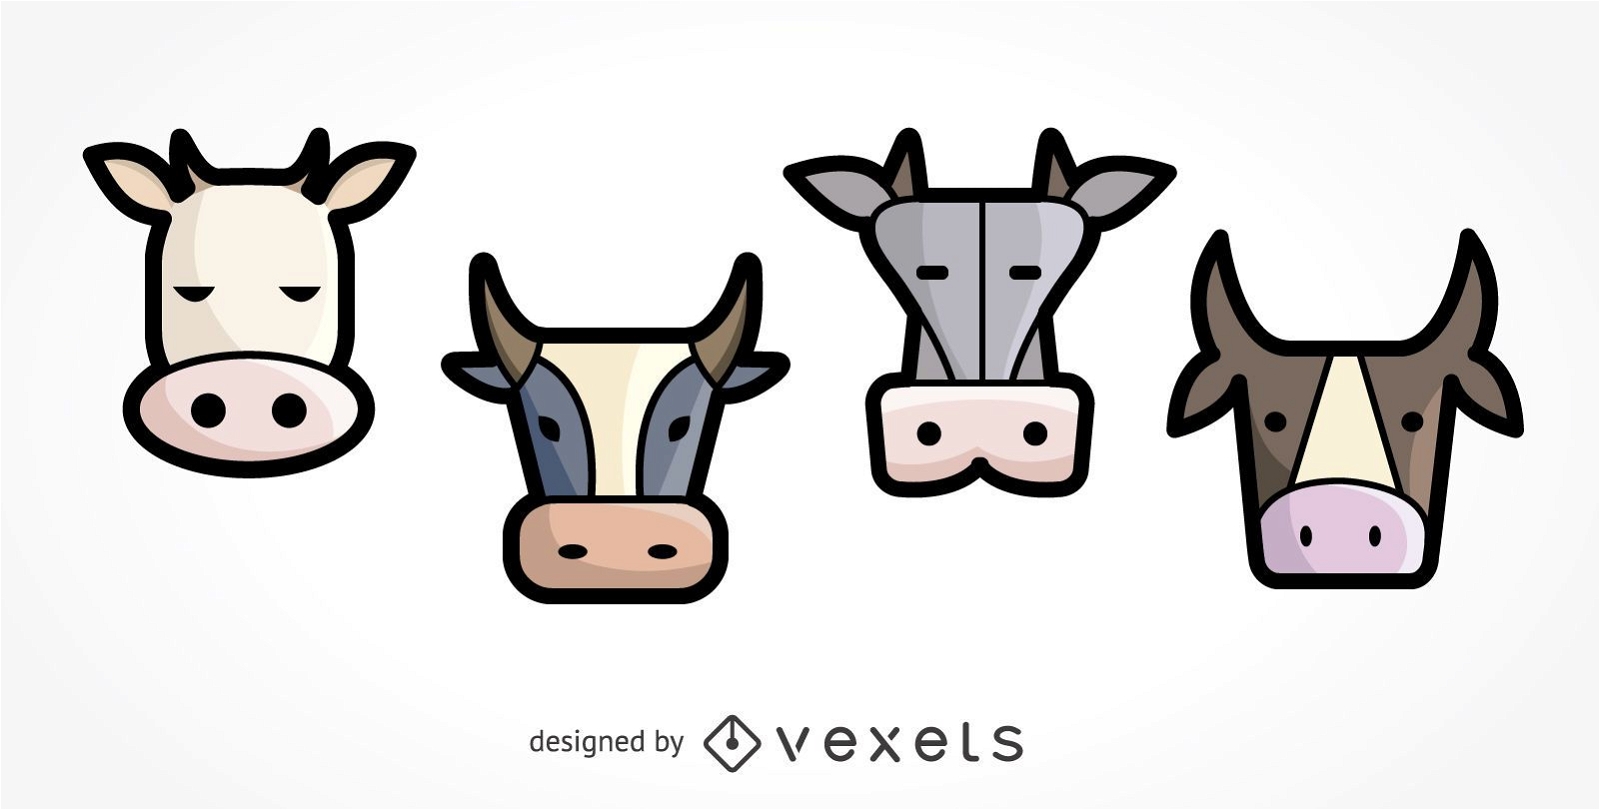 4 cow icon illustration set